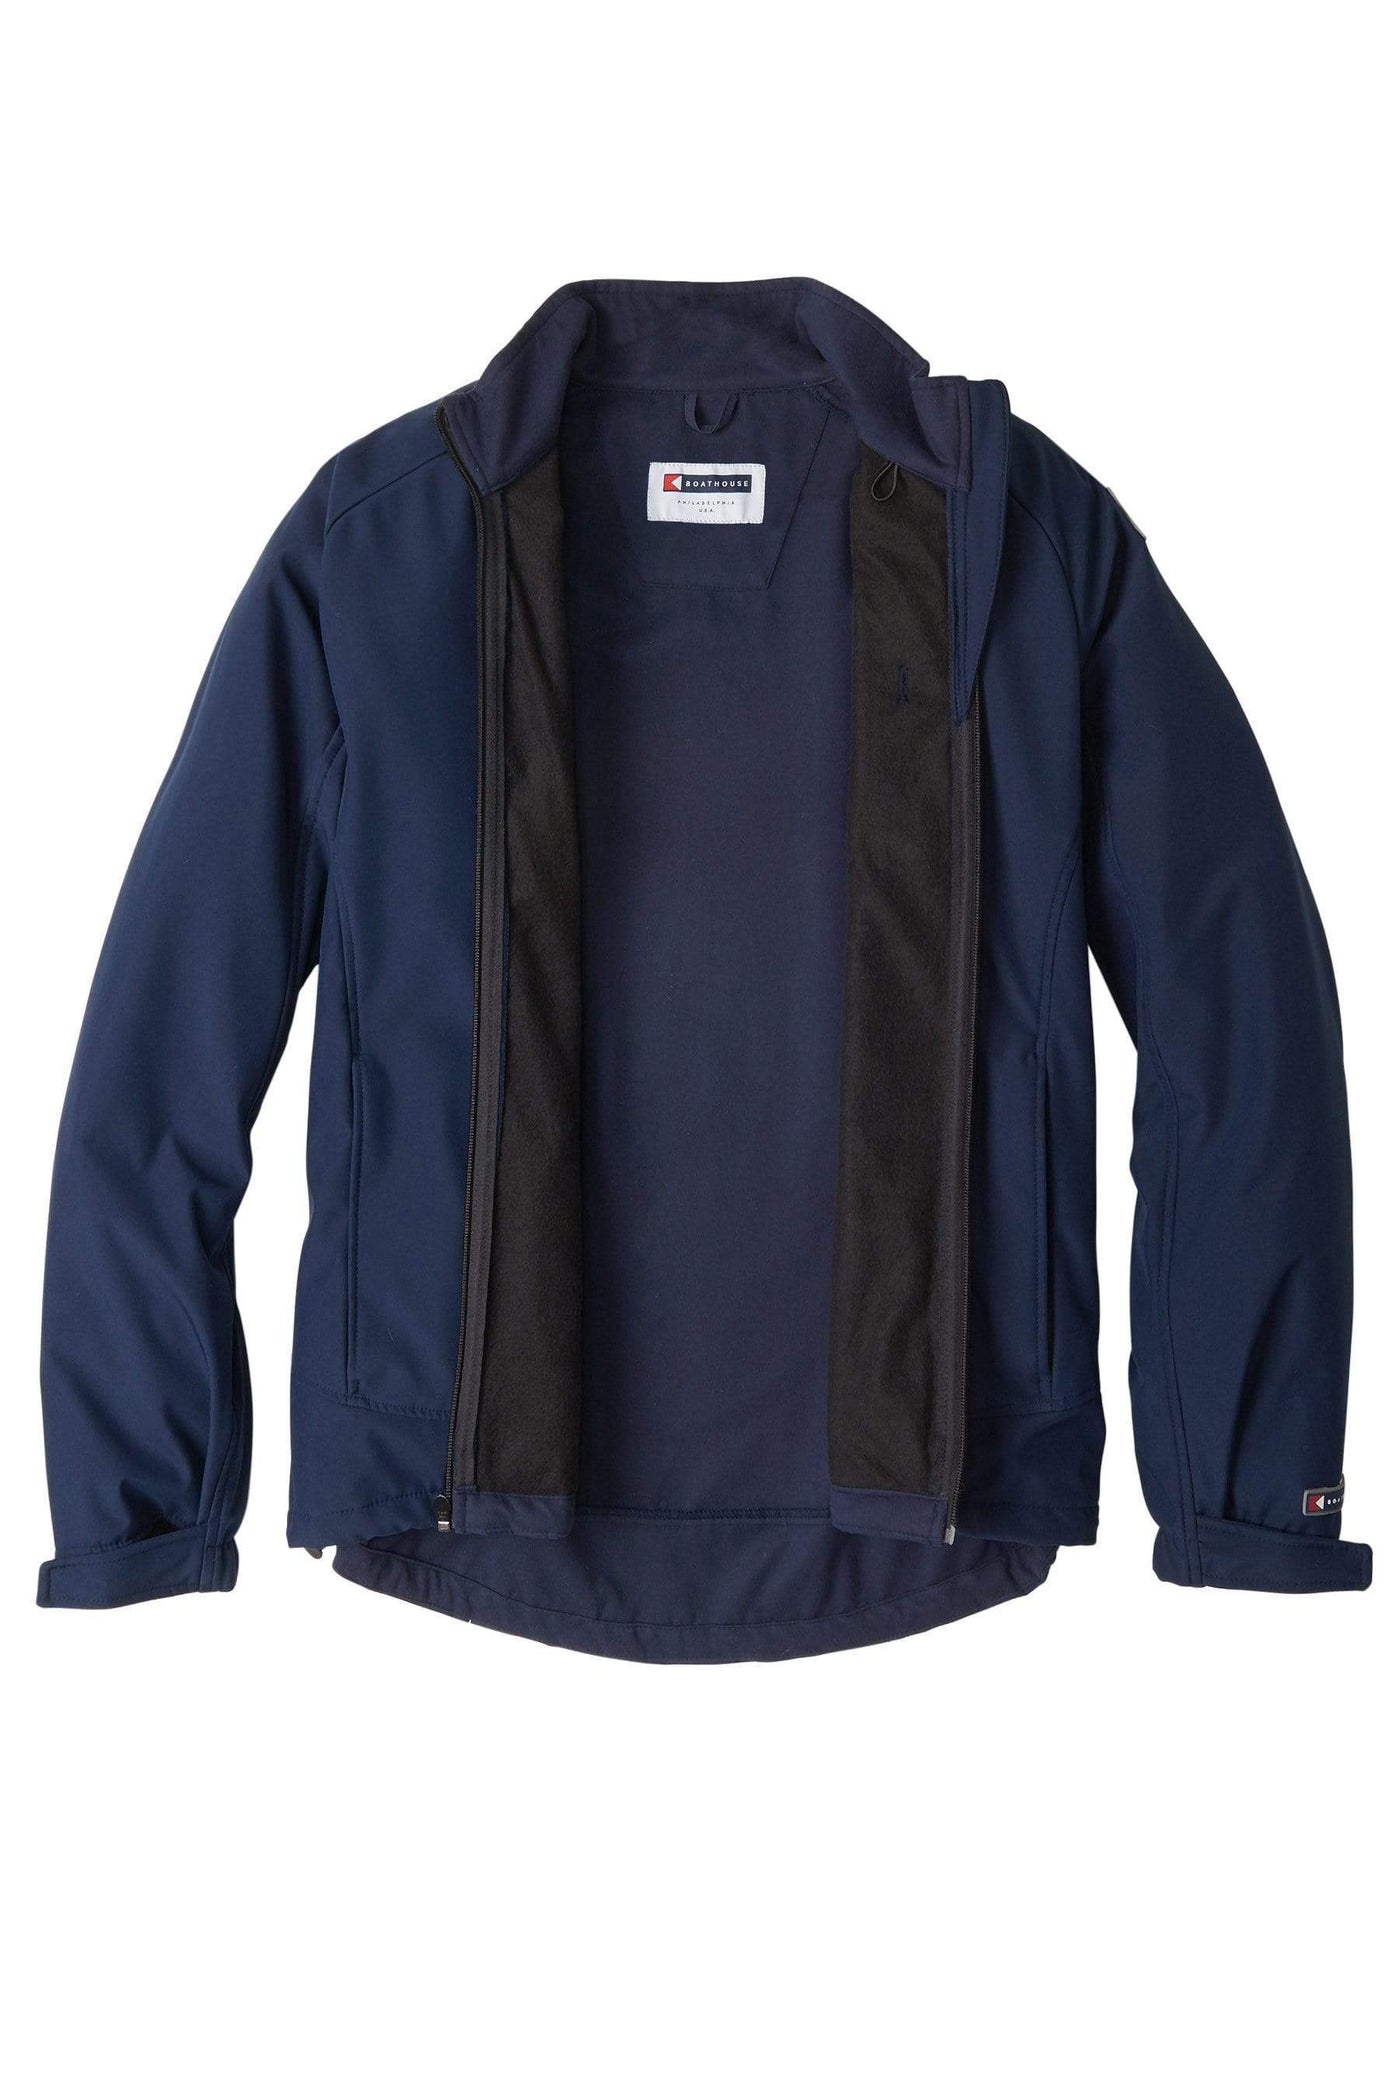 Men's Boathouse Equinox Soft Shell Jacket